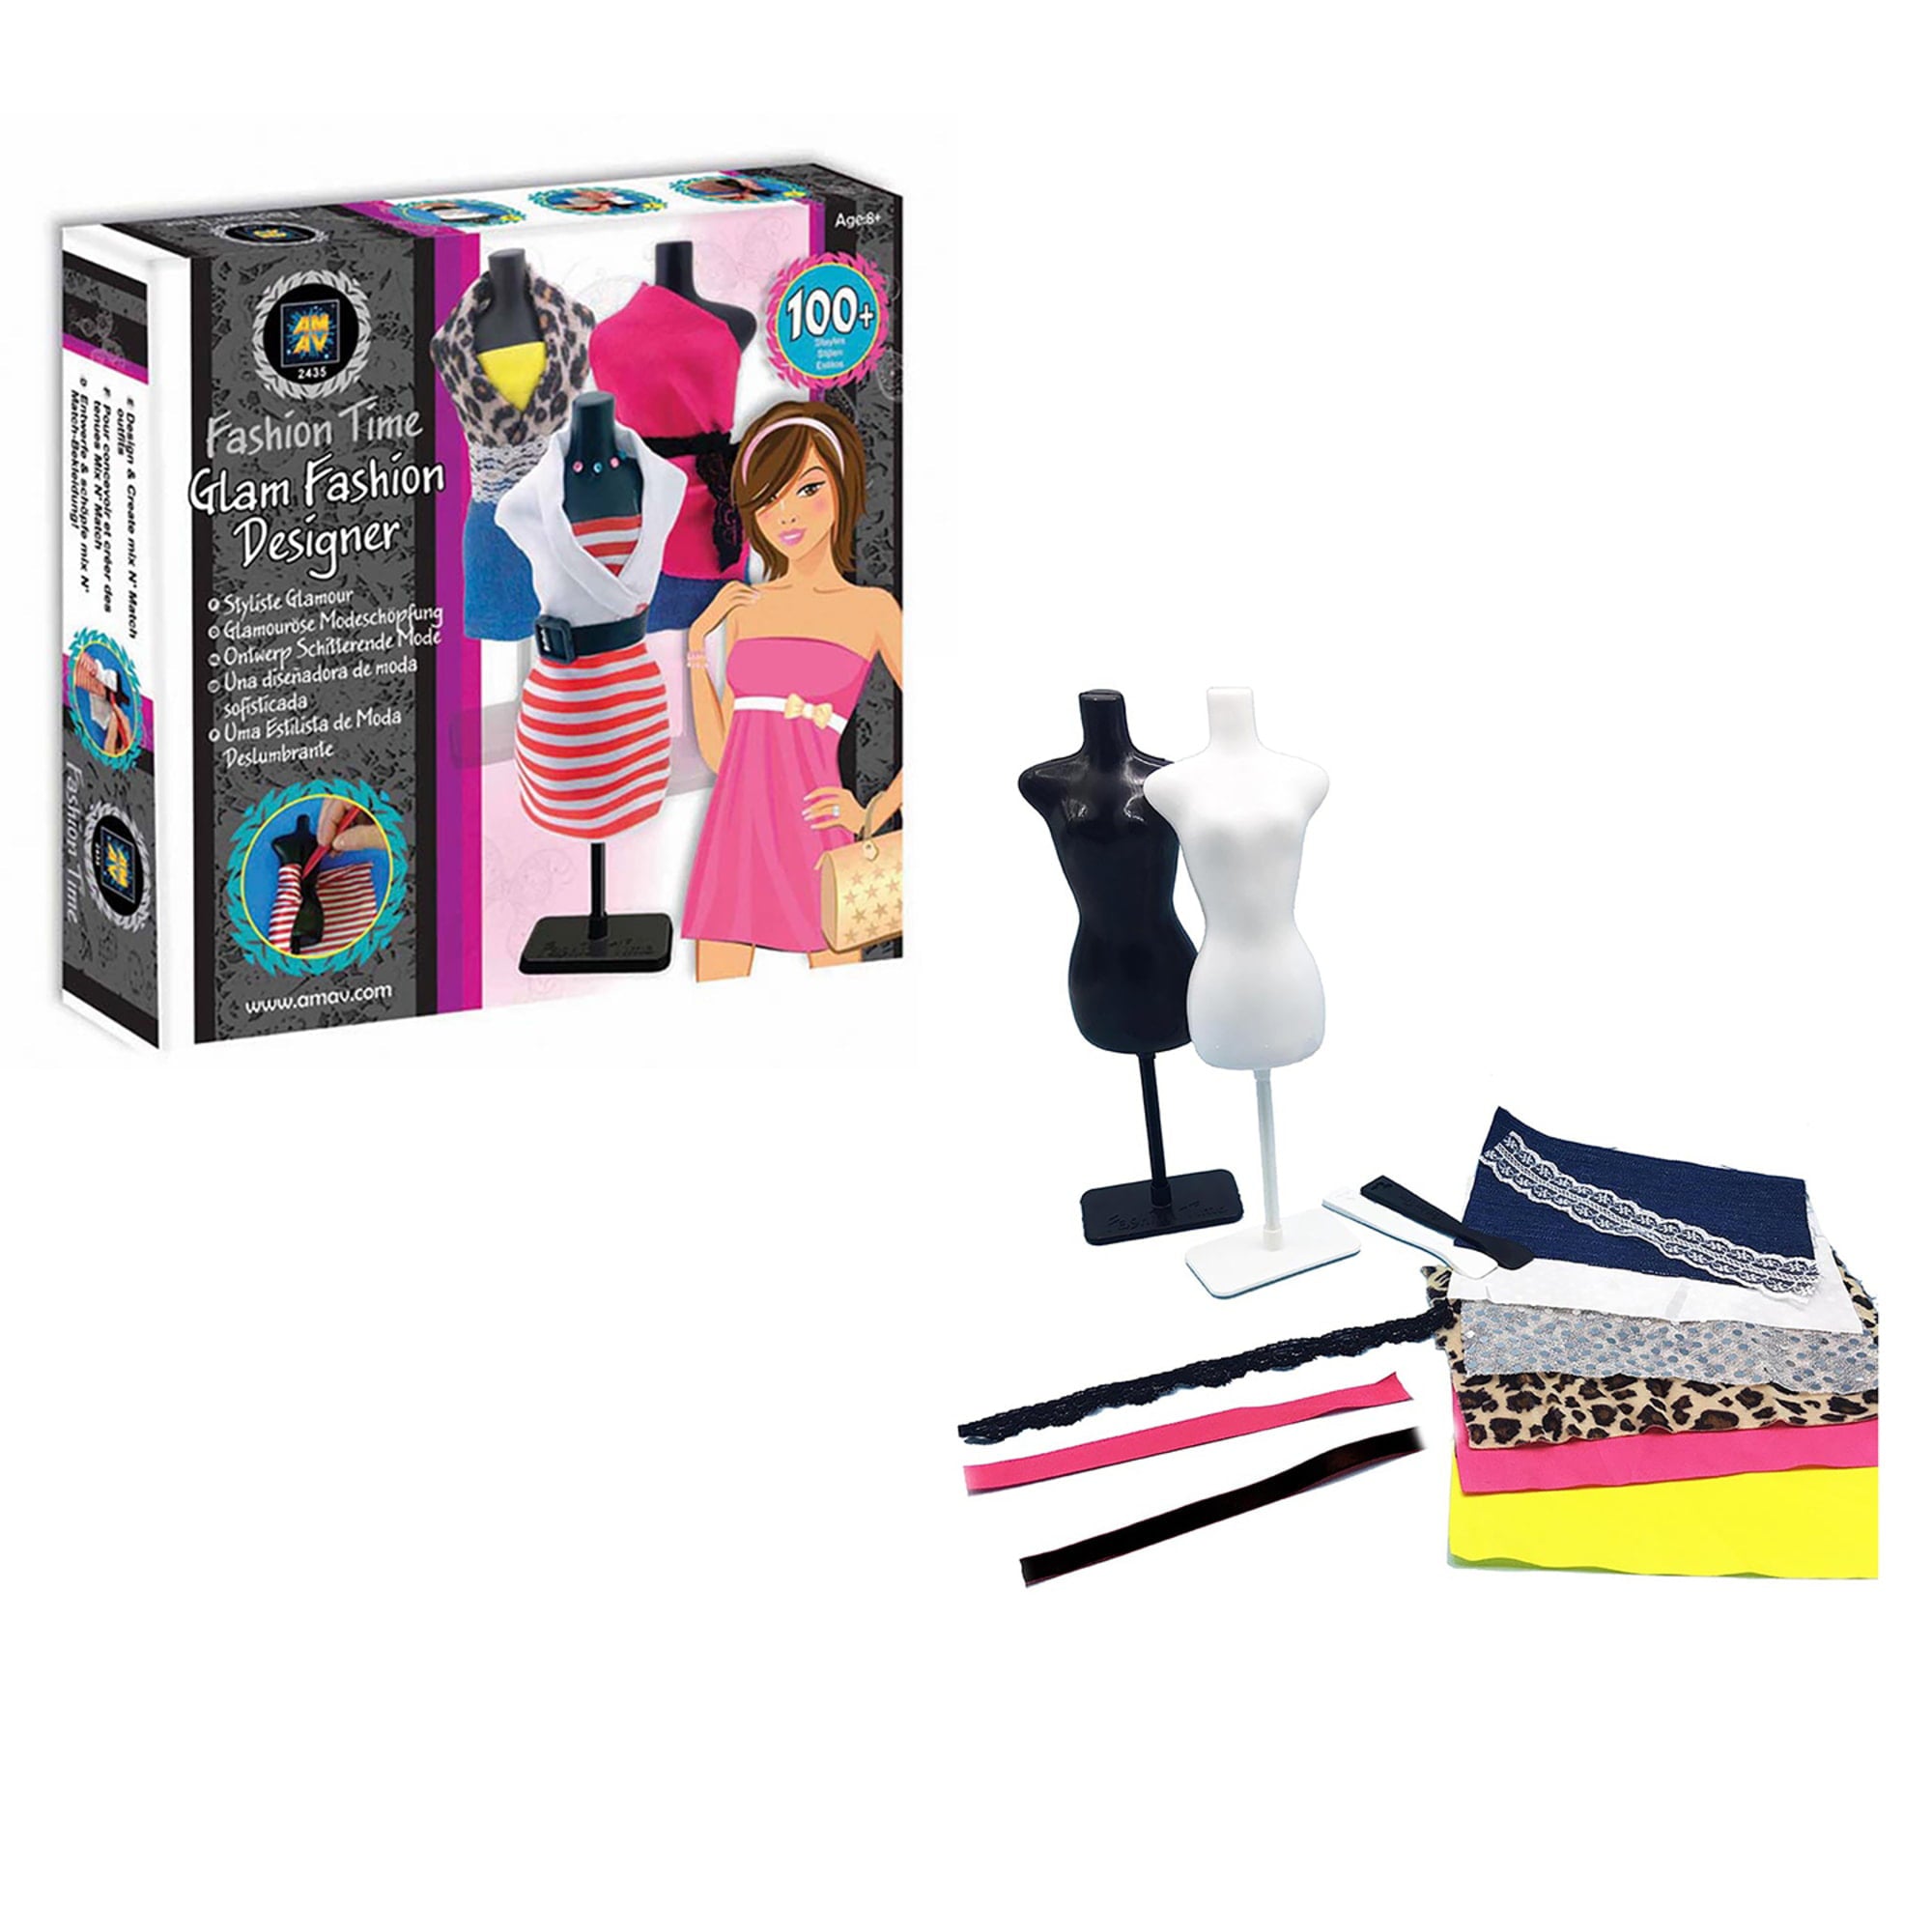 Amav Fashion Time Glam Fashion Designer Activity Kit, 12 Pack